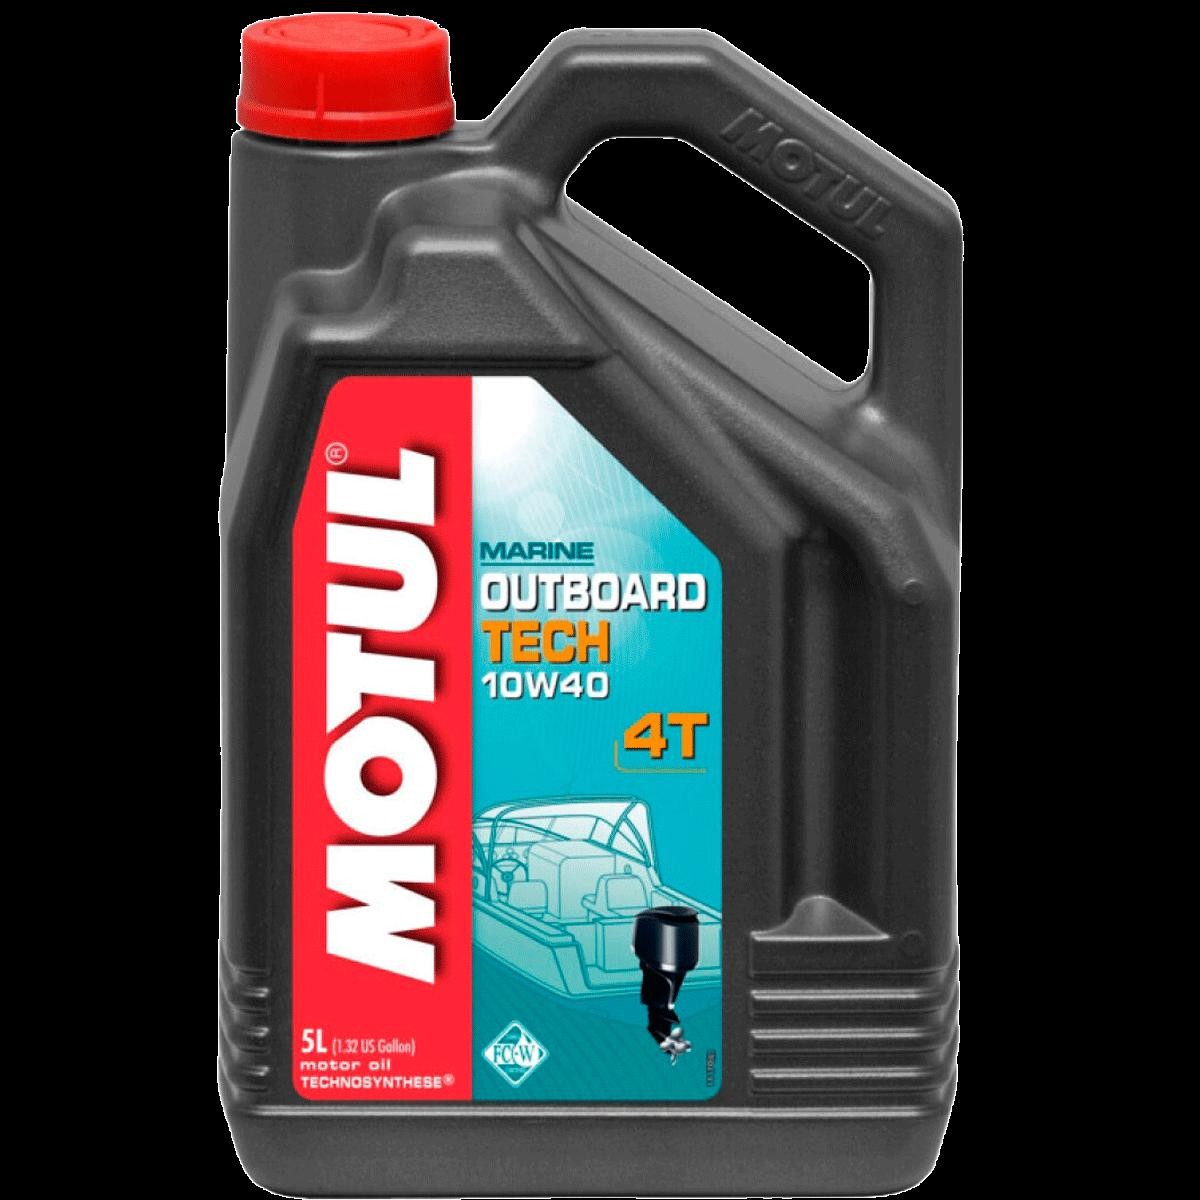 Automobile oil API SG MOTUL - 106354 OUTBOARD TECH, 4T